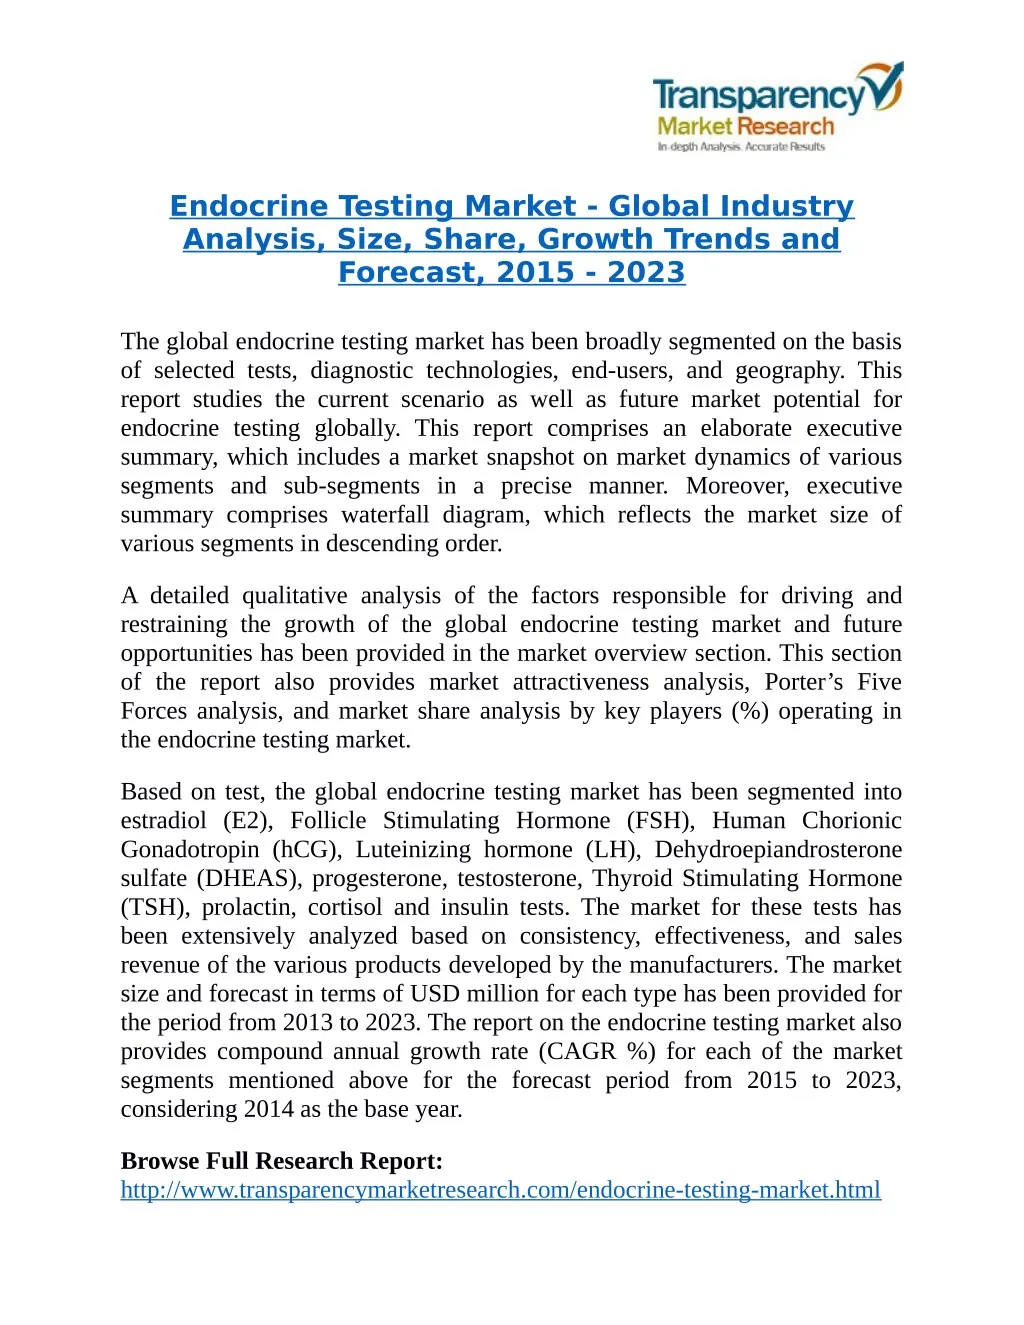 endocrine testing market global industry analysis